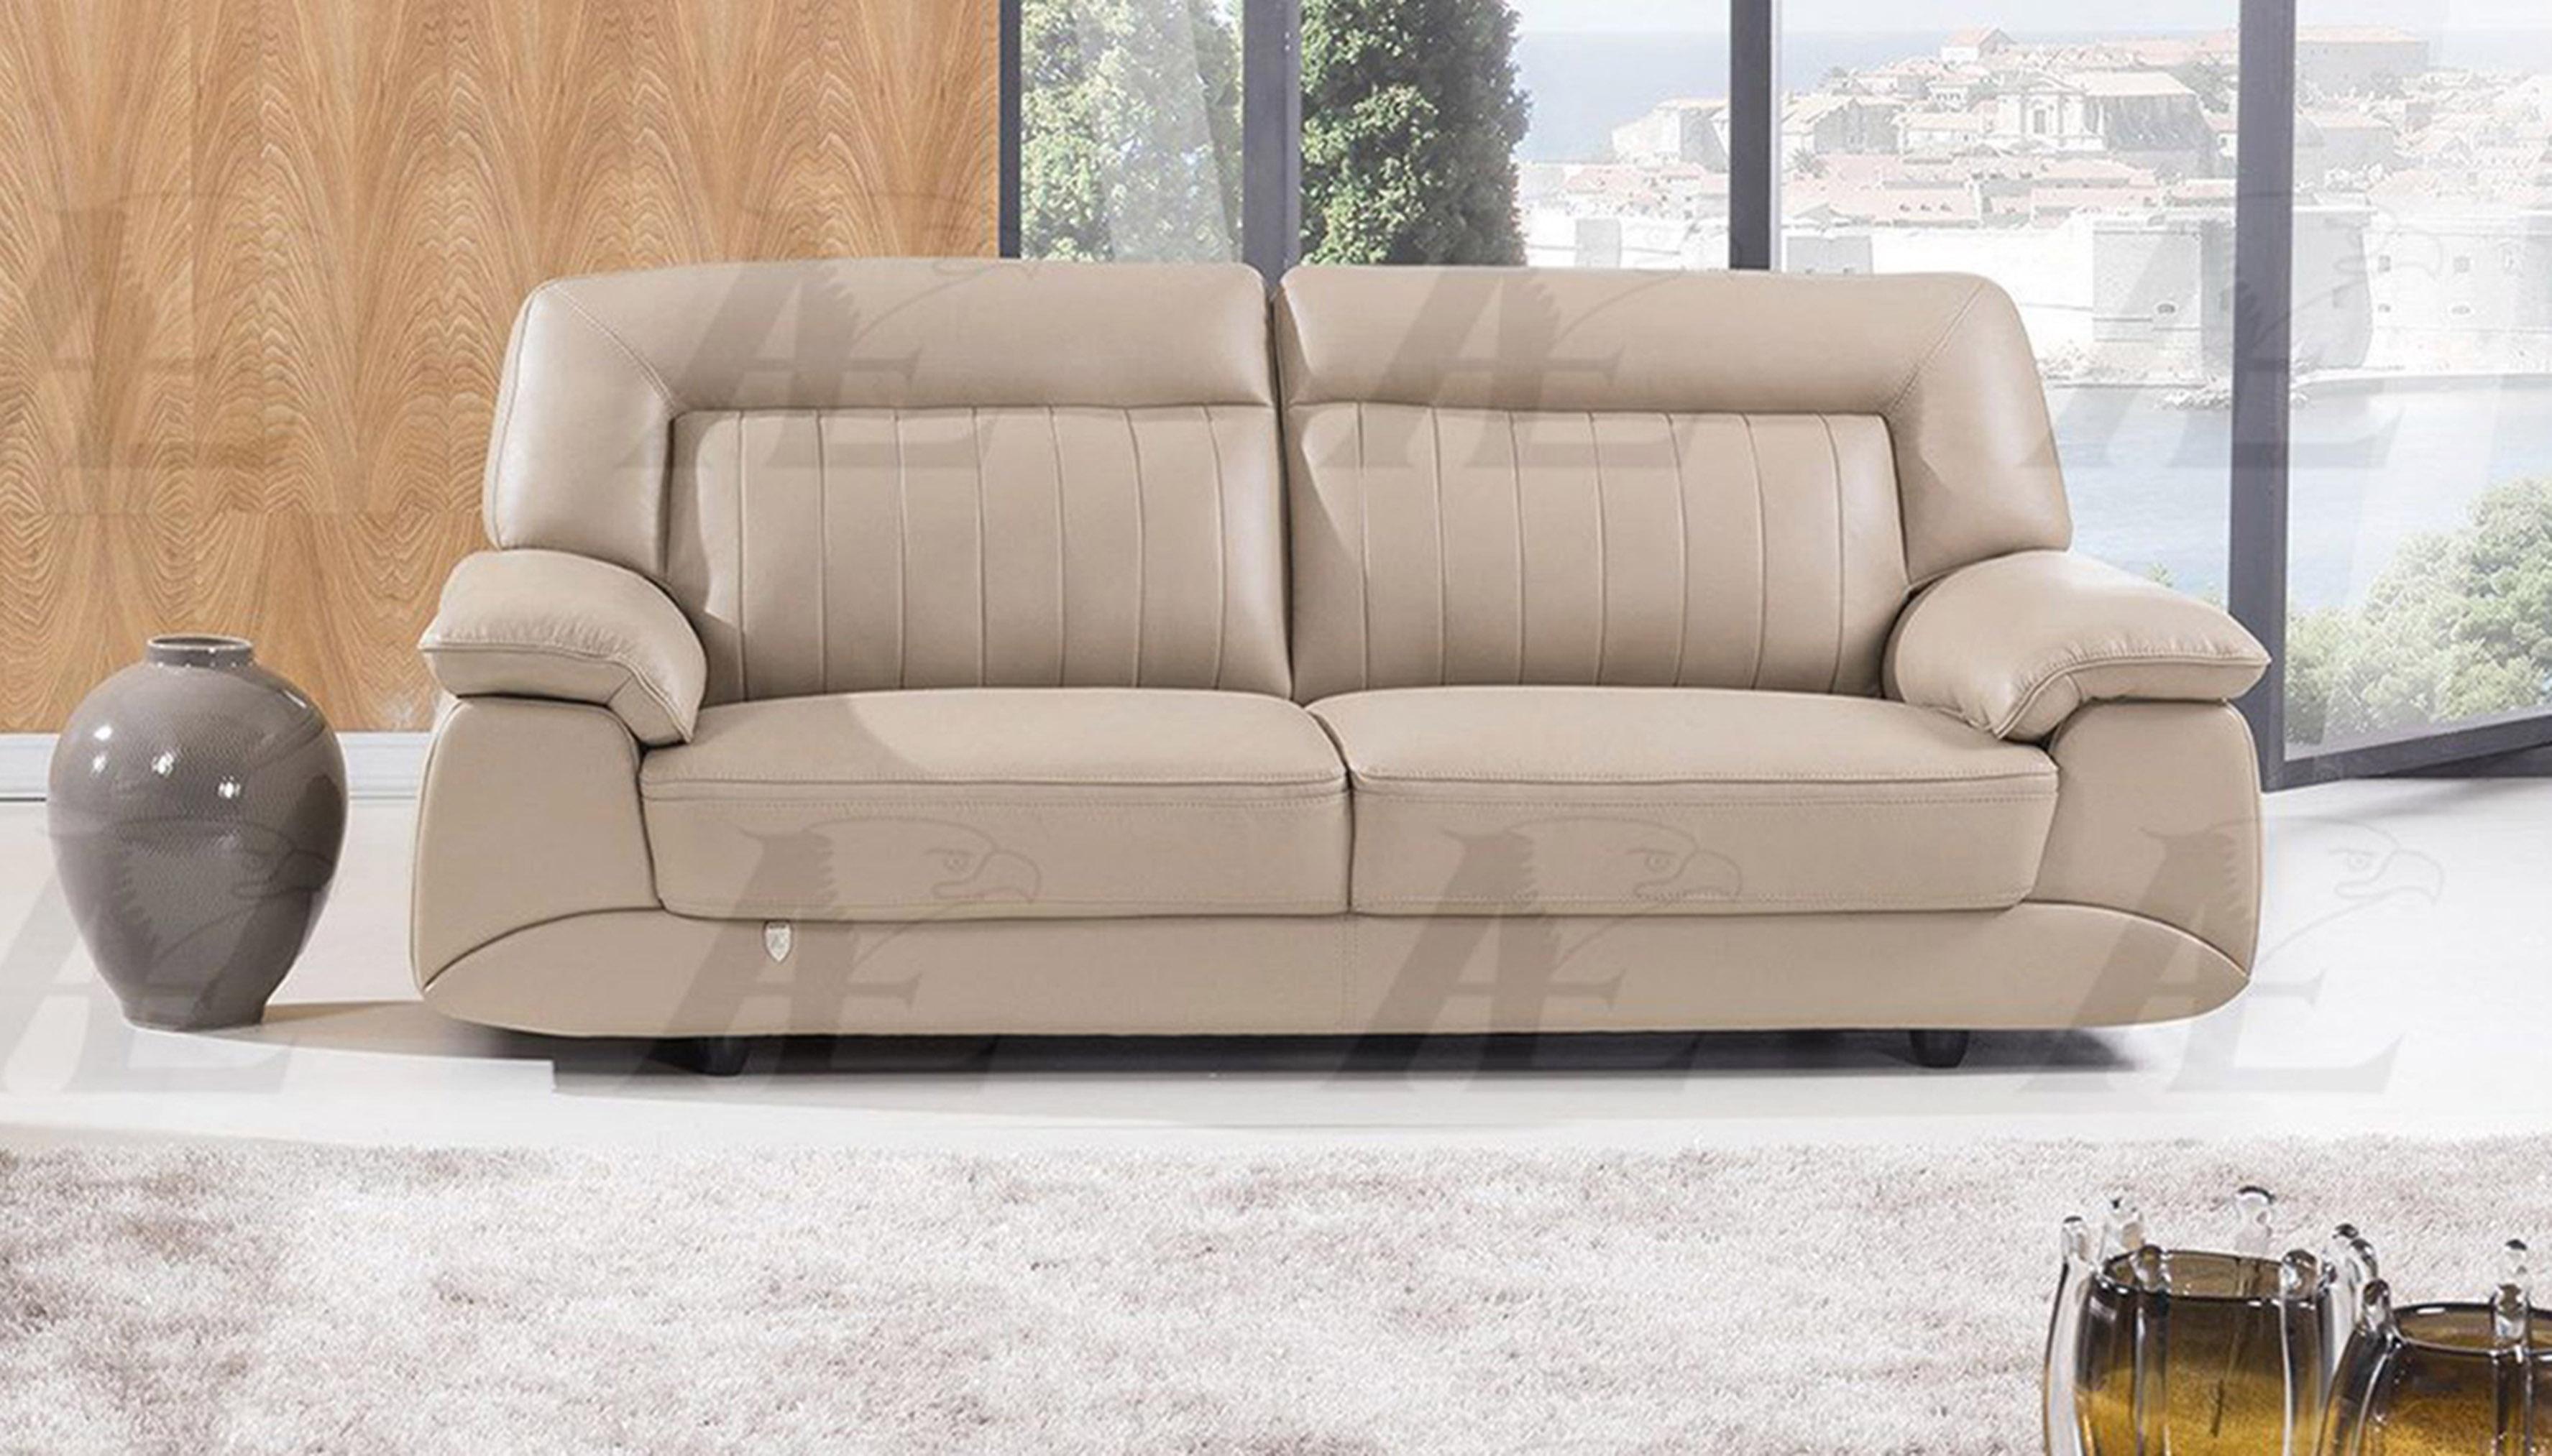 

    
American Eagle Furniture EK072-TAN Tan Top Grain Italian Leather Sofa Modern
